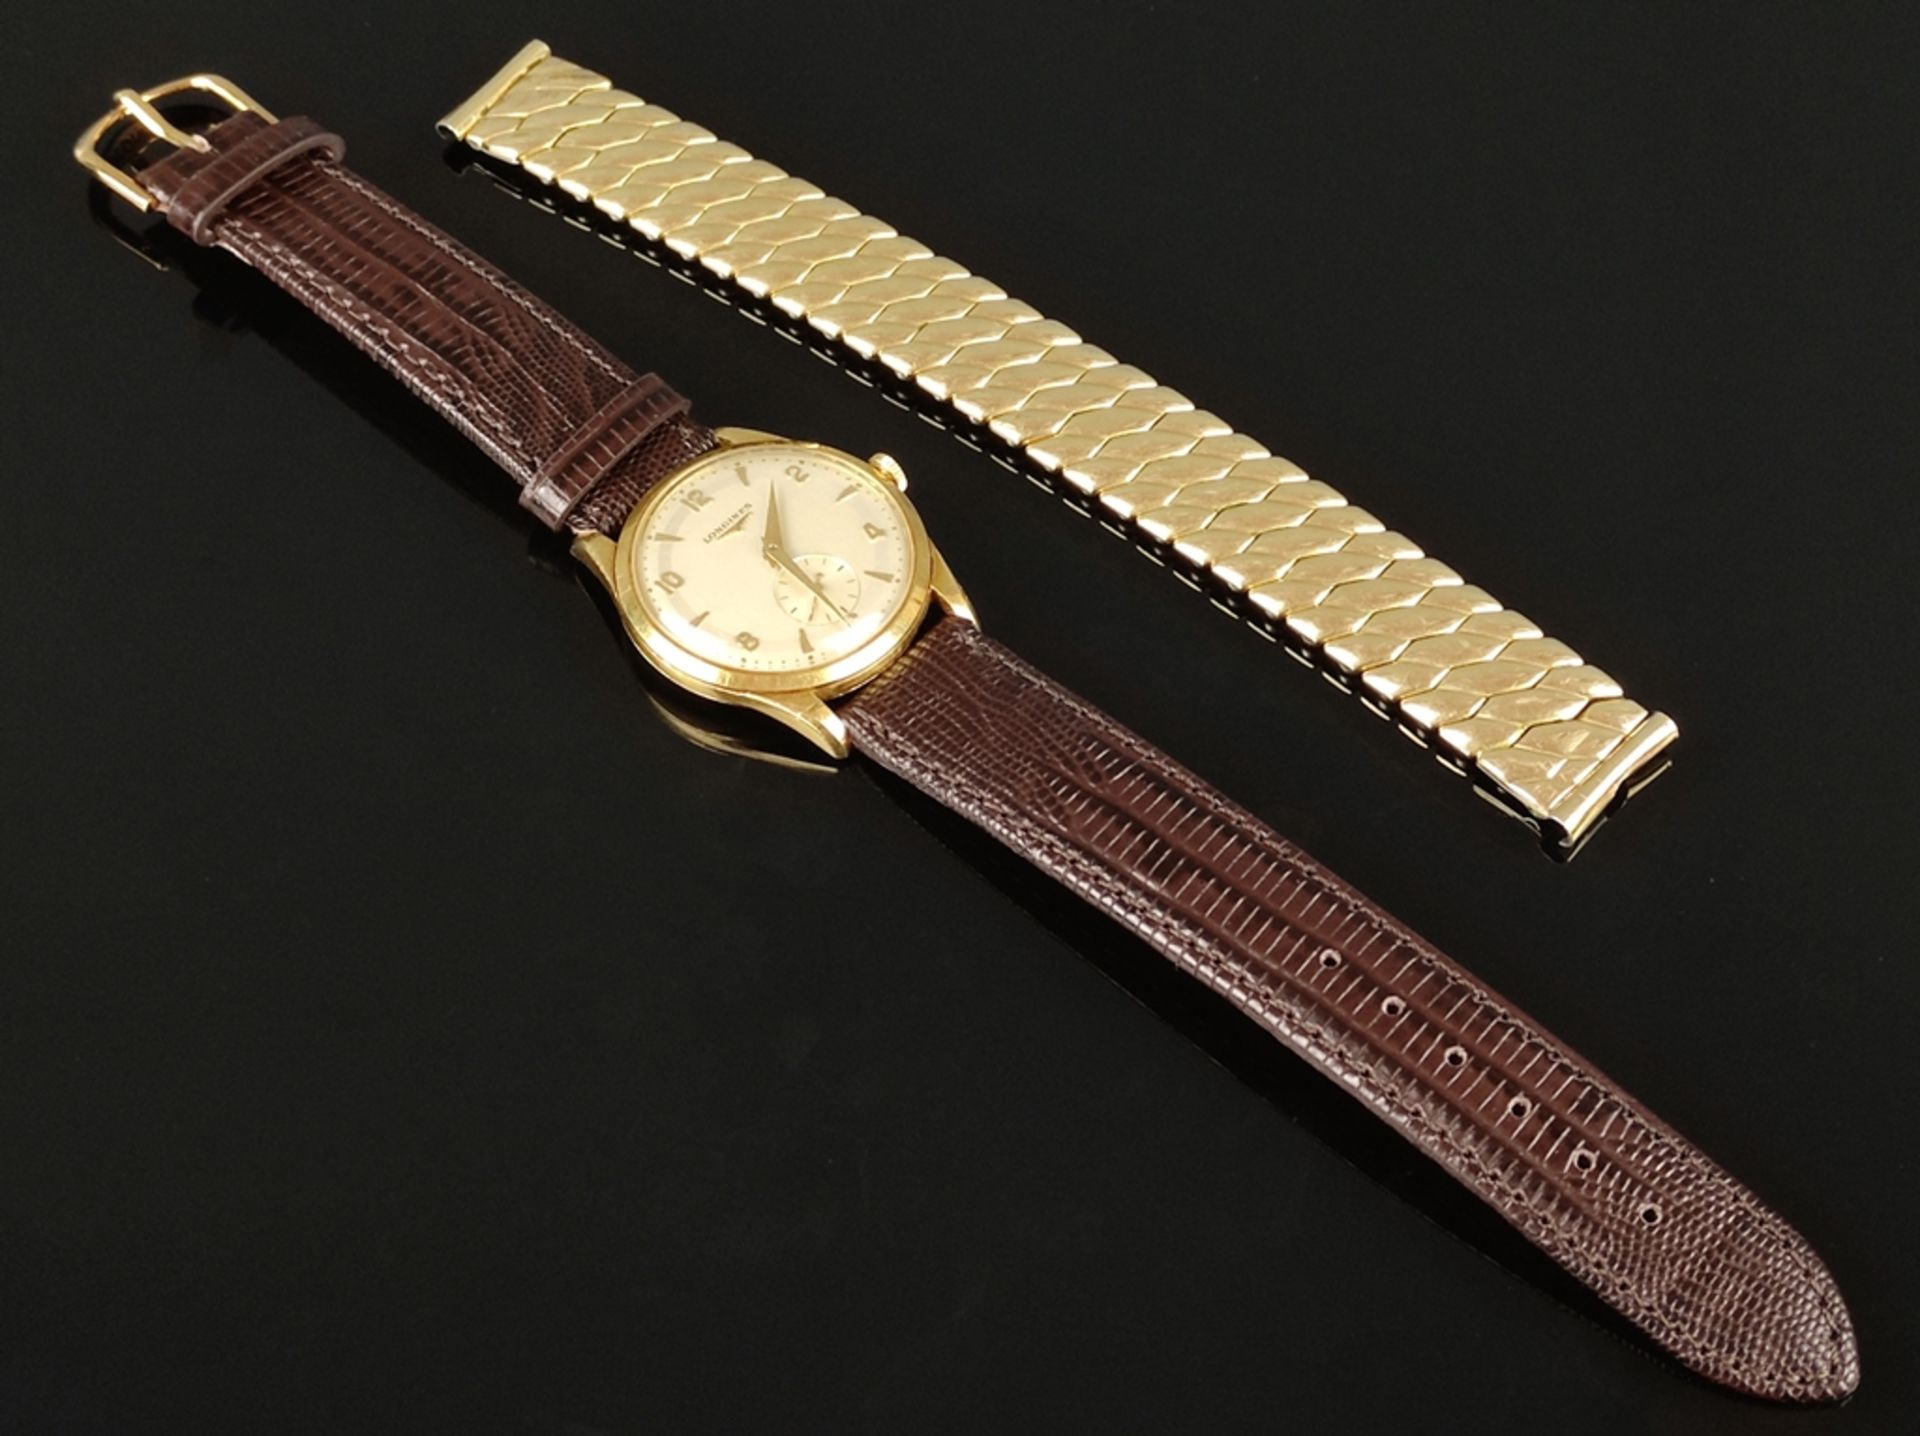 Wristwatch, Longines Calatrava, 8878651 caliber 23Z, 750/18K gold case, clock face with gold indice - Image 5 of 5